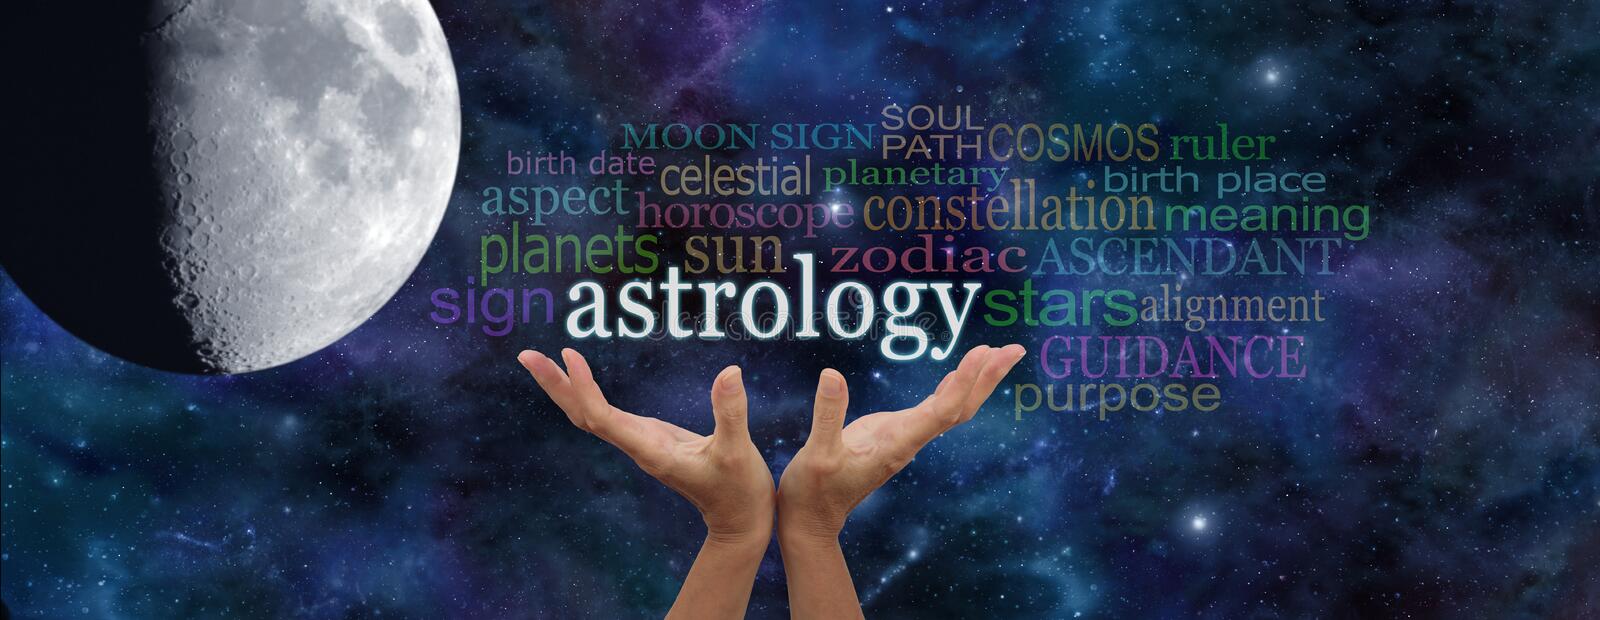 Professional Services, Astrologer,Astrologers